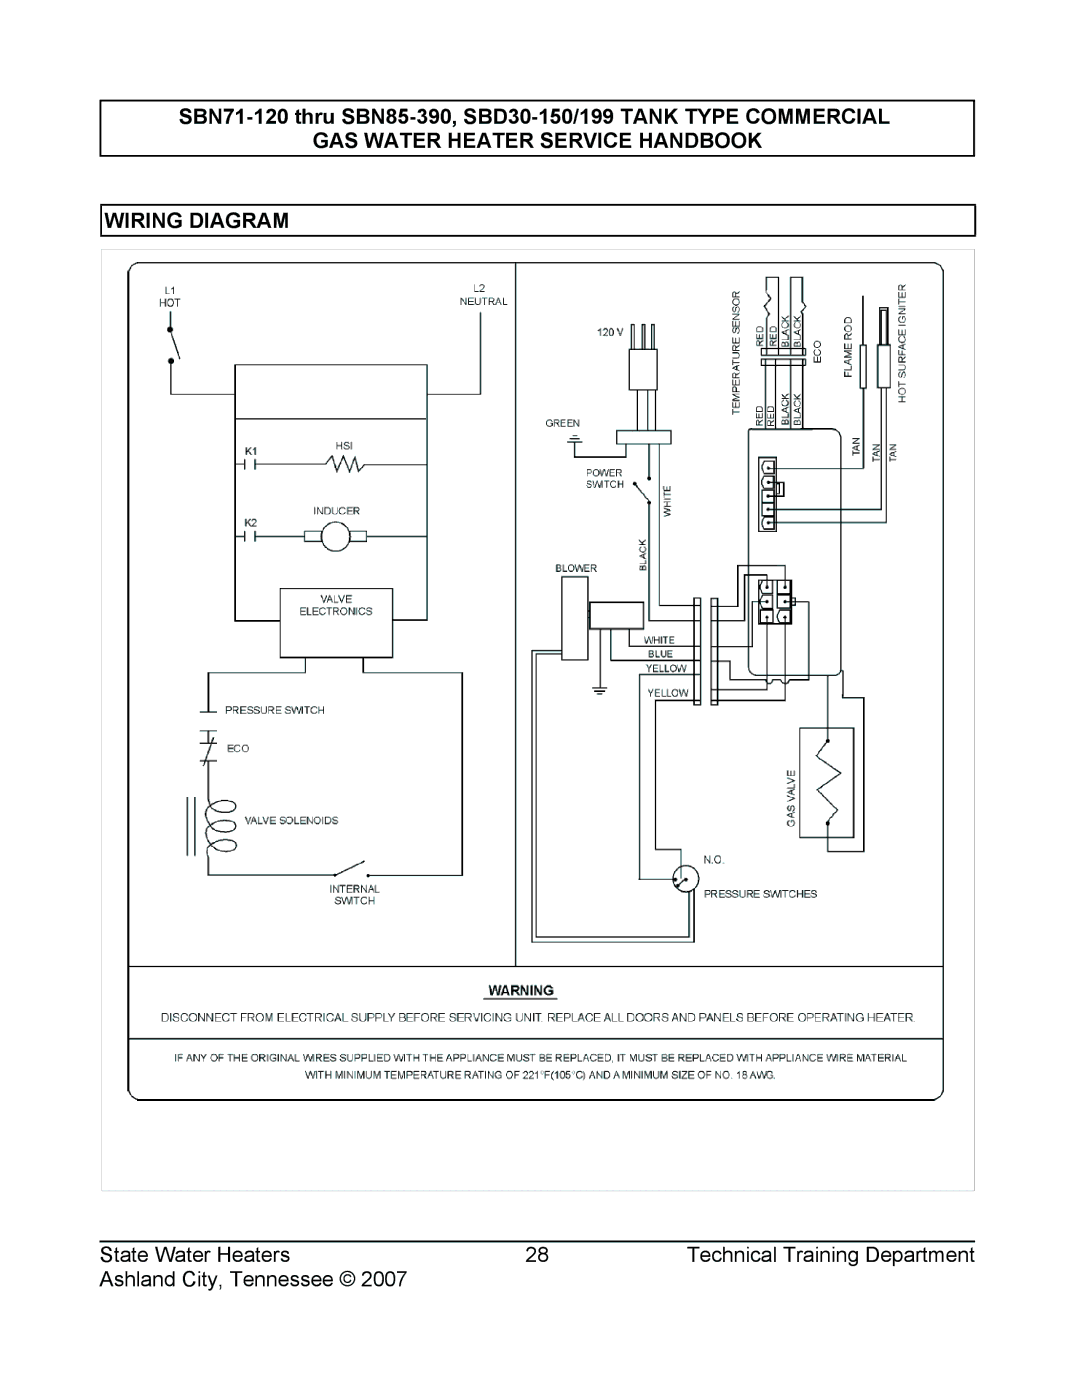 State Industries SERIES 108, SBD30 150, SBN85 390 (A), SBN71 120, SBD30 199 GAS Water Heater Service Handbook Wiring Diagram 